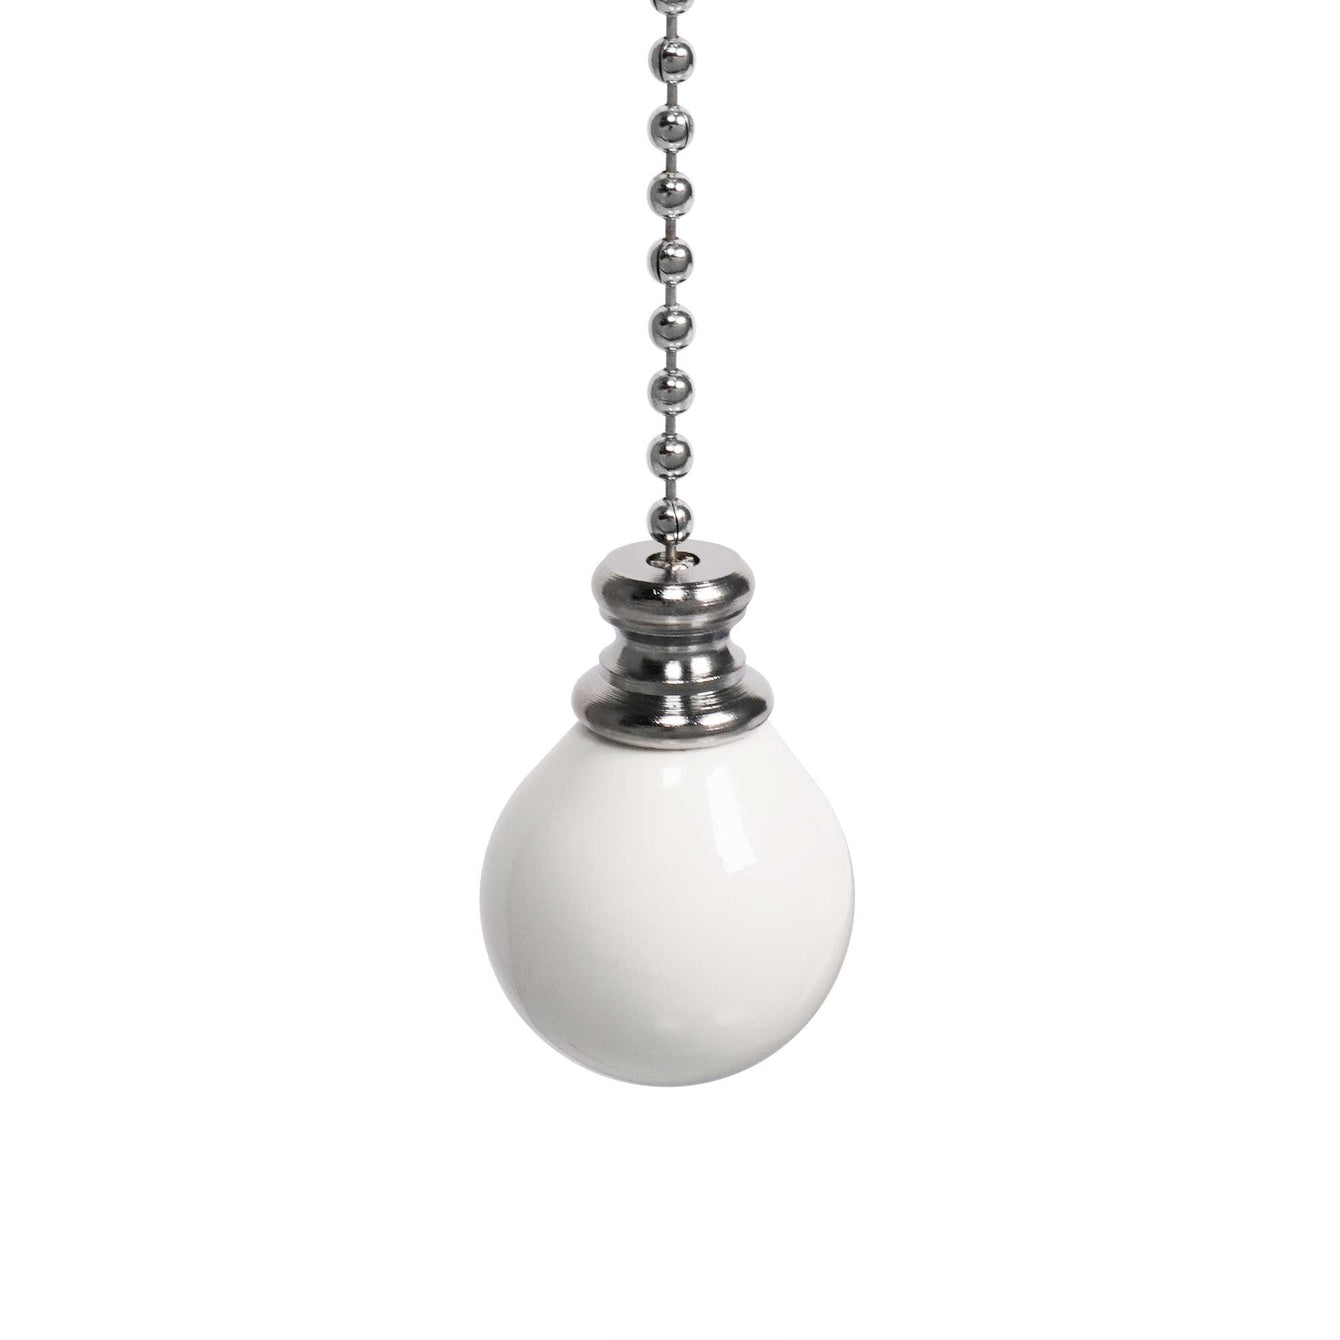 ElekTek Light Pull Chain Ball With 80cm Matching Chain Green